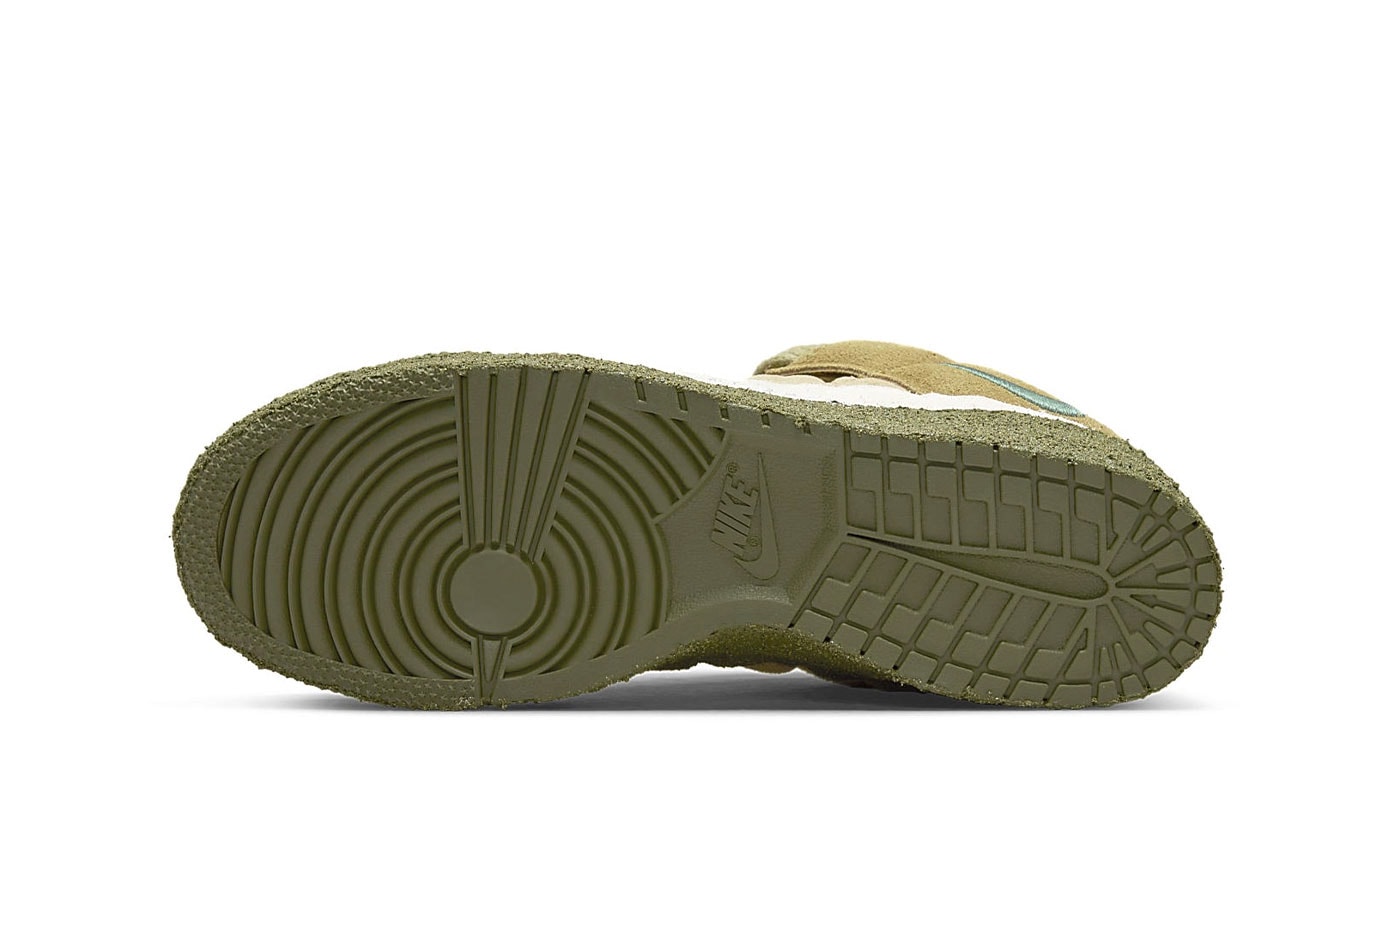 Cactus Plant Flea Market Nike Dunk Low Official Look Release Info DM0430-700 Date Buy Price CPFM